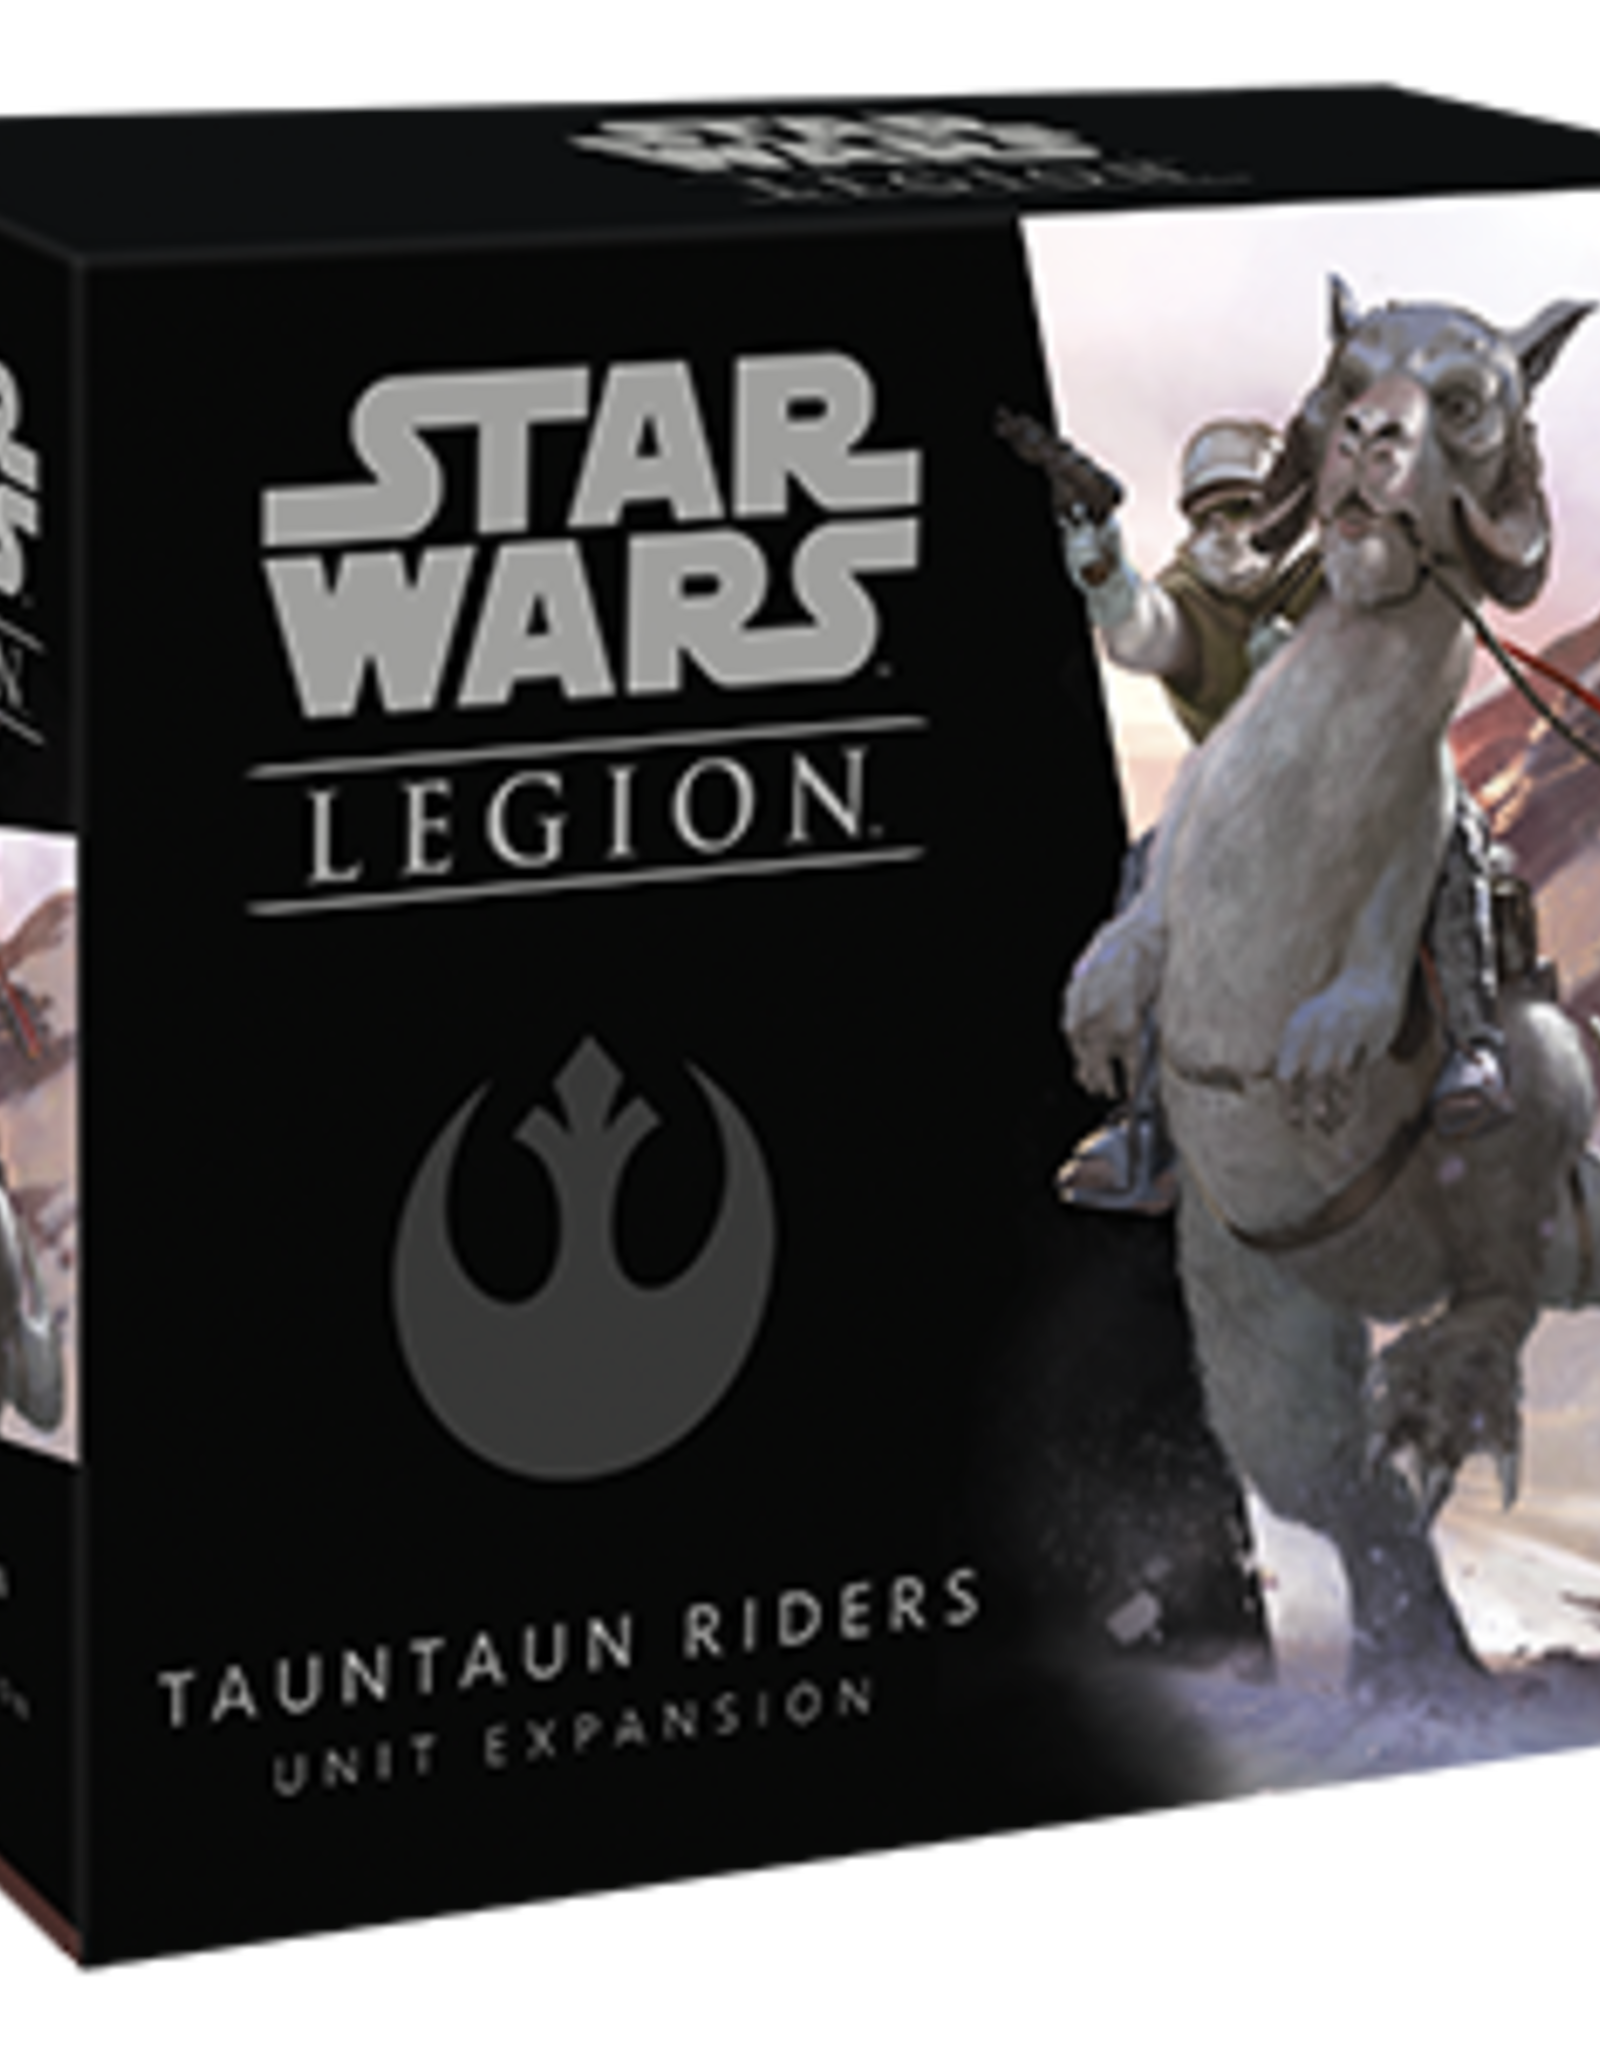 FFG Star Wars: Legion - Tauntaun Riders Unit Expansion